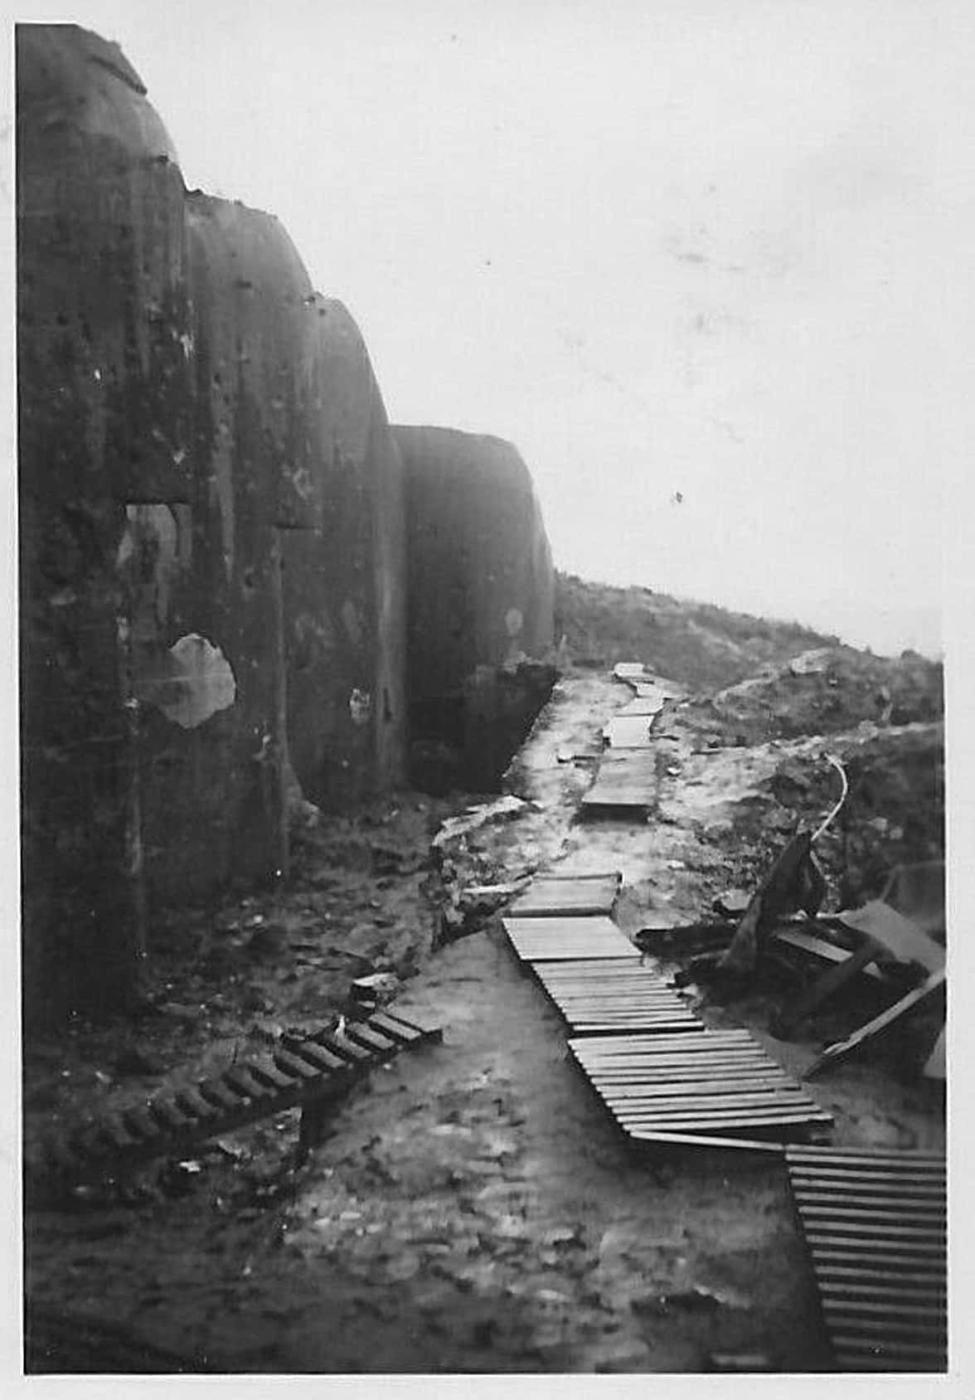 Ligne Maginot - HOCHWALD - (Ouvrage d'artillerie) - Bloc 6
Photot allemande de 1940
